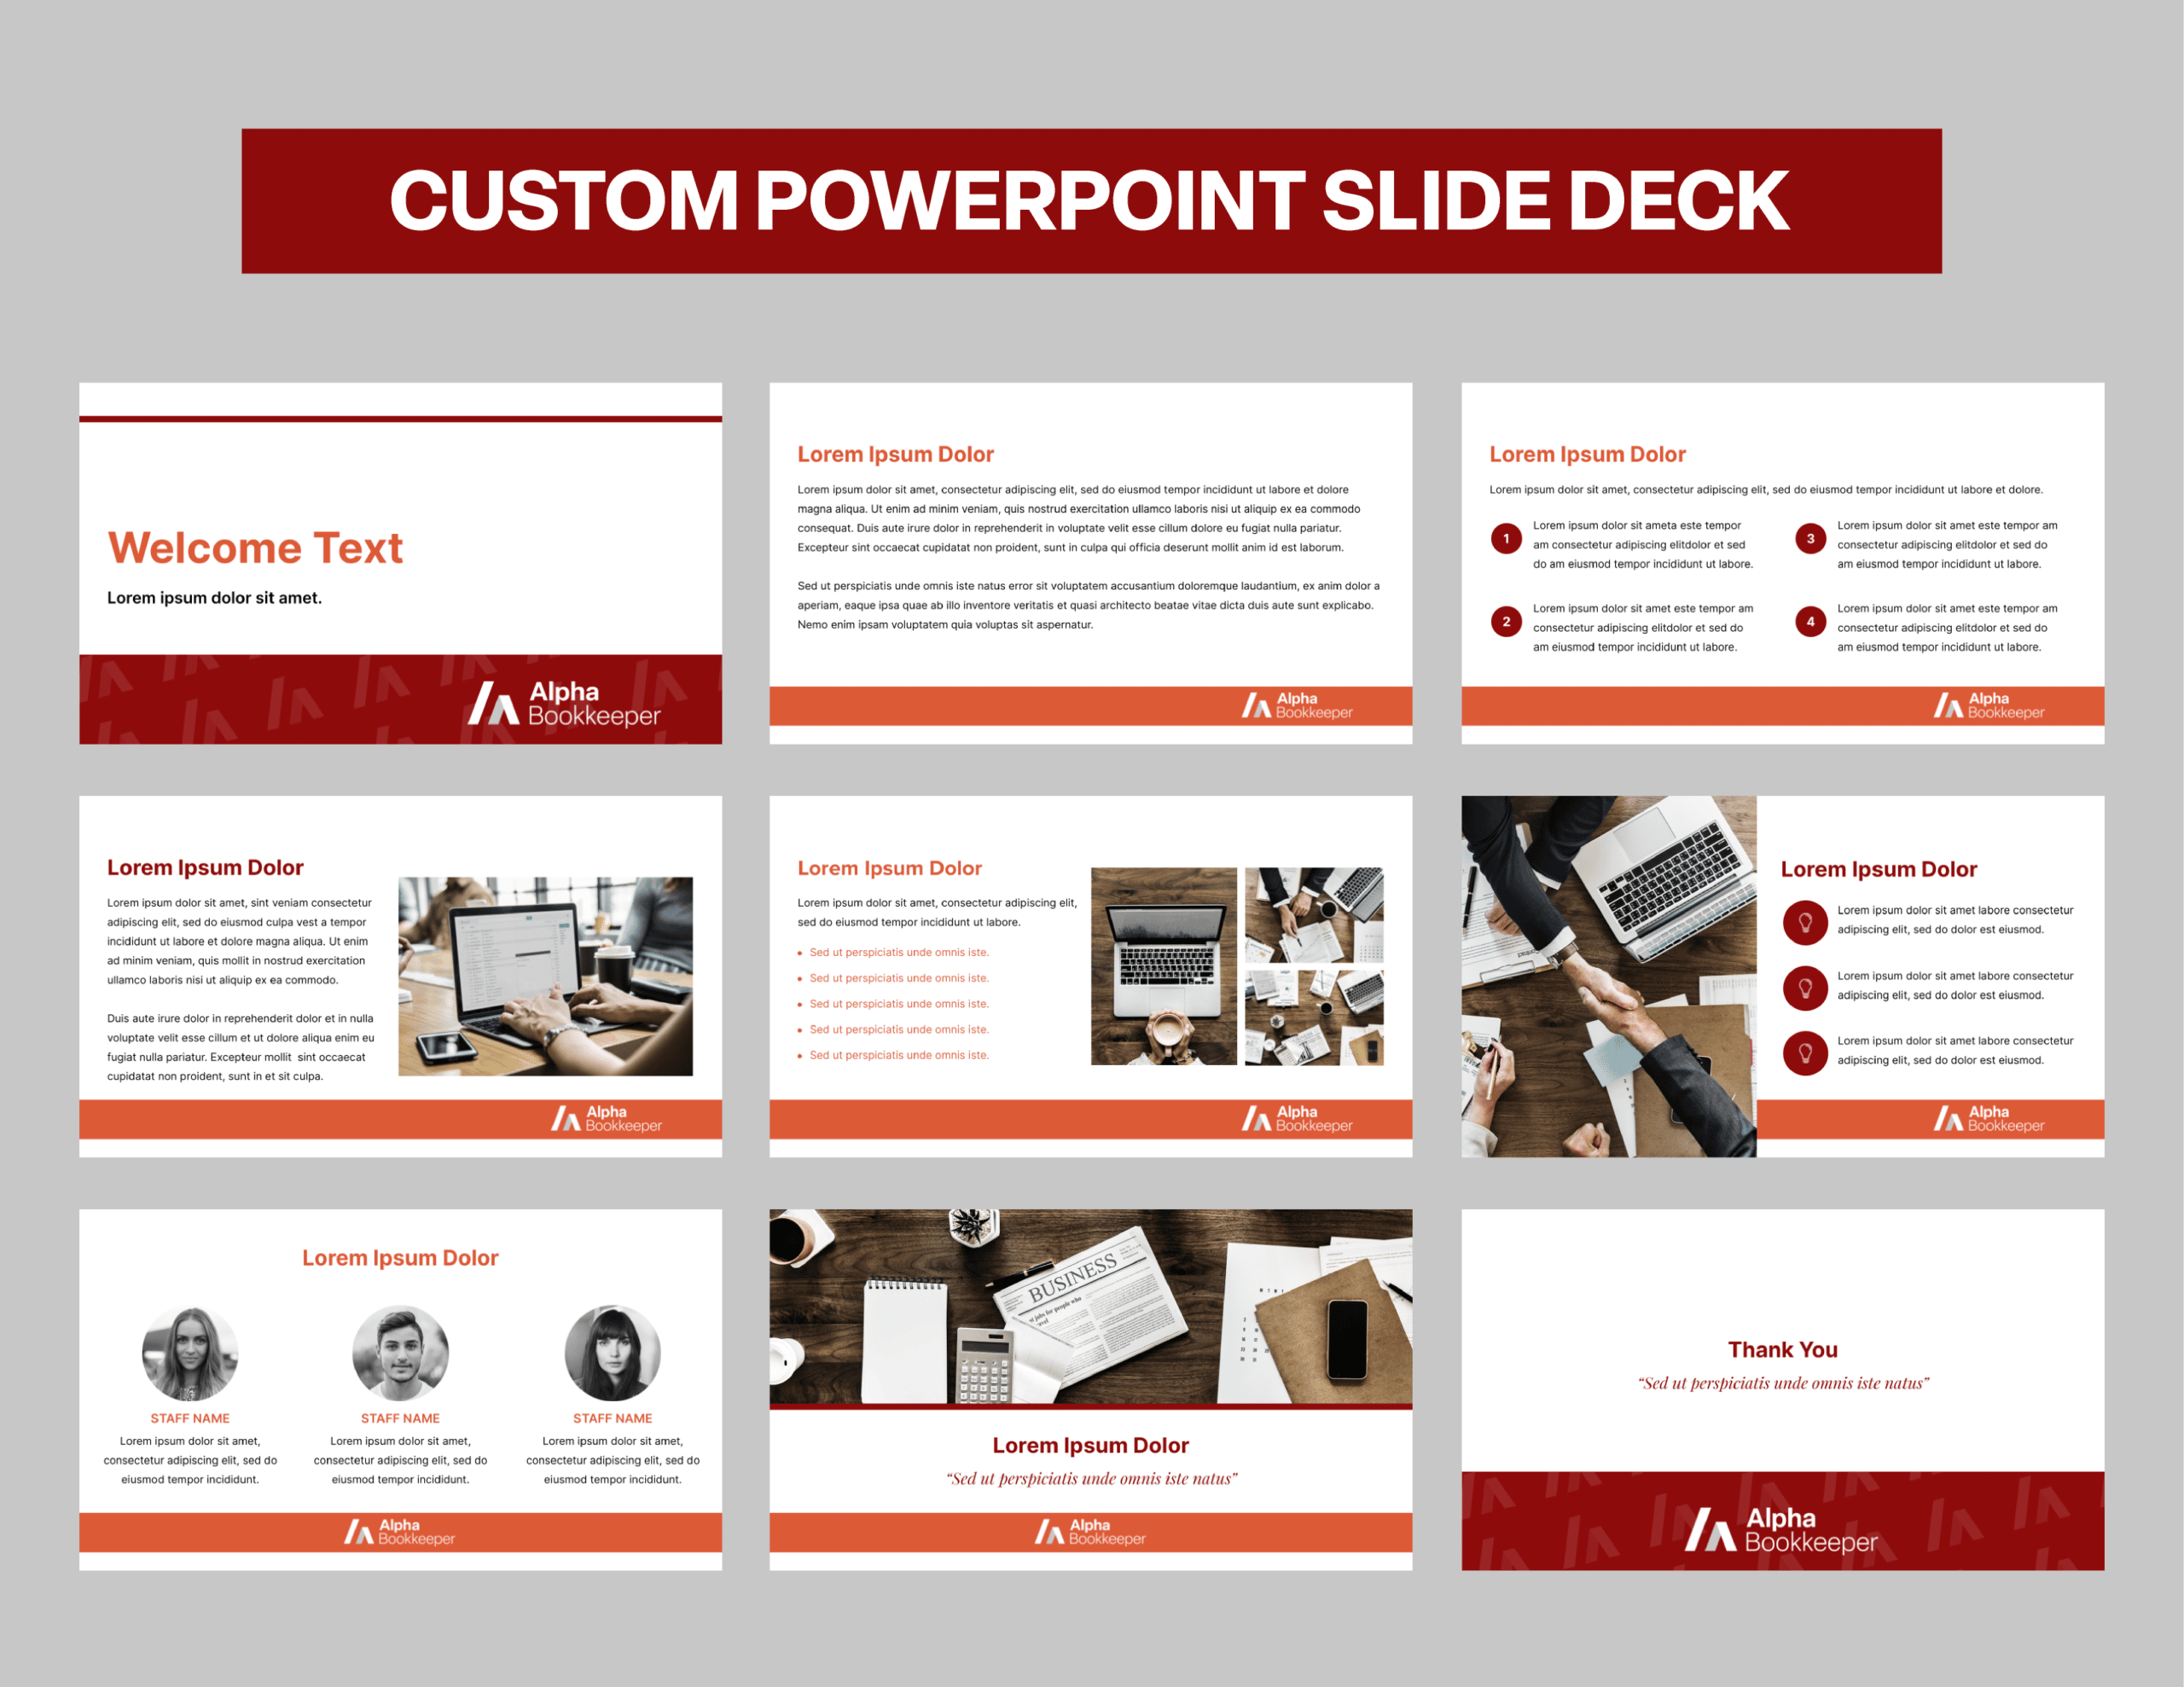 05Alpha_Showcase_Custom PowerPoint Slide Deck